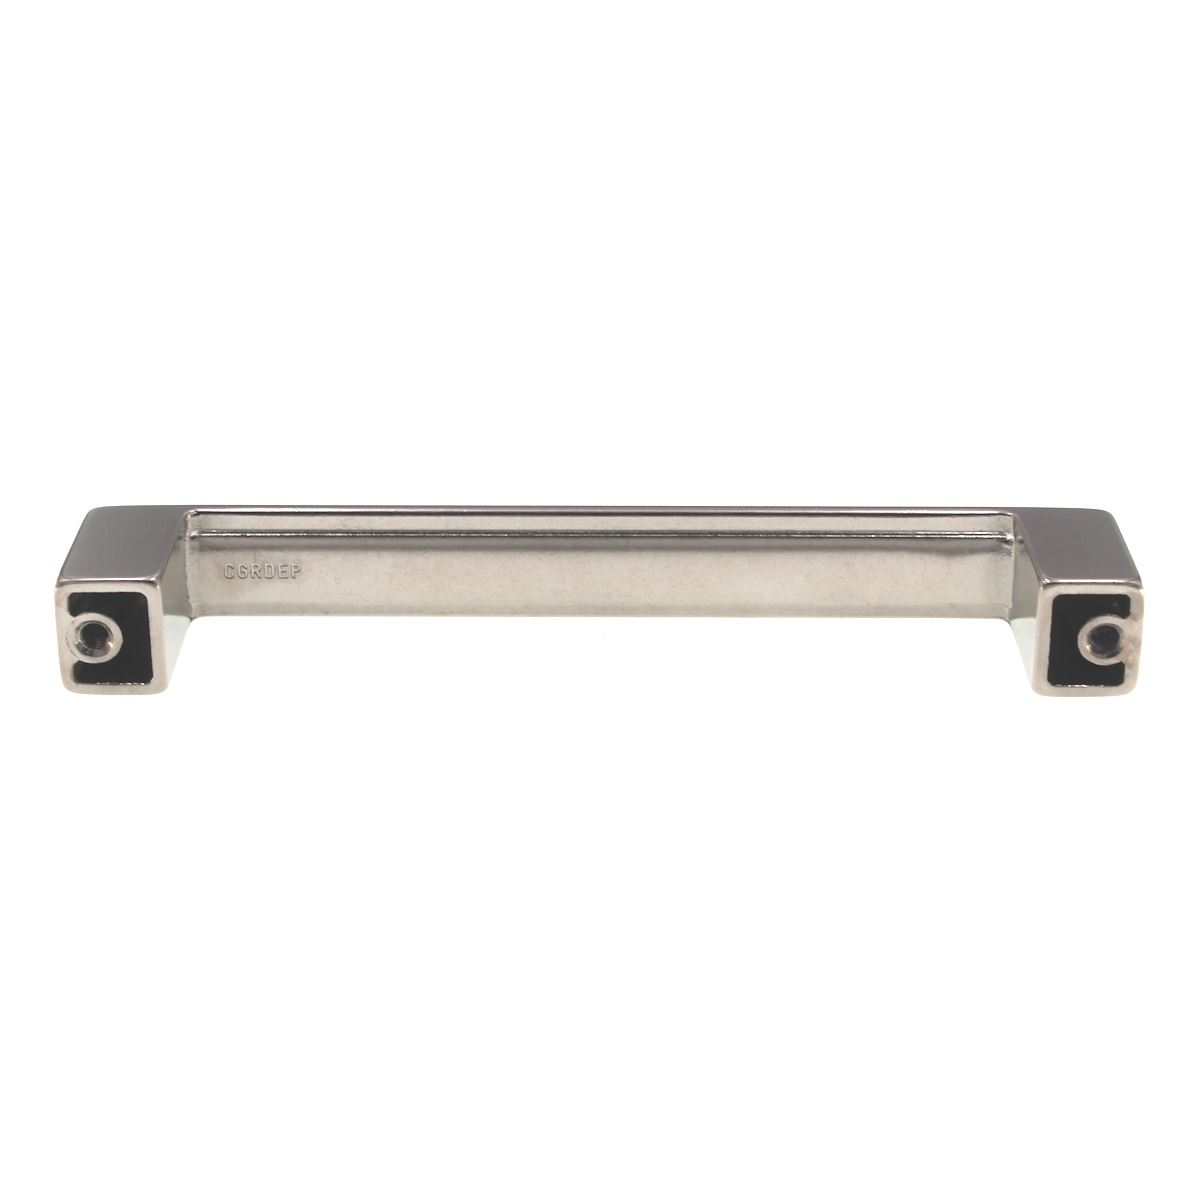 Schaub Classico Flat Cabinet Bar Pull 5" (128mm) Ctr Satin Nickel 221-15S